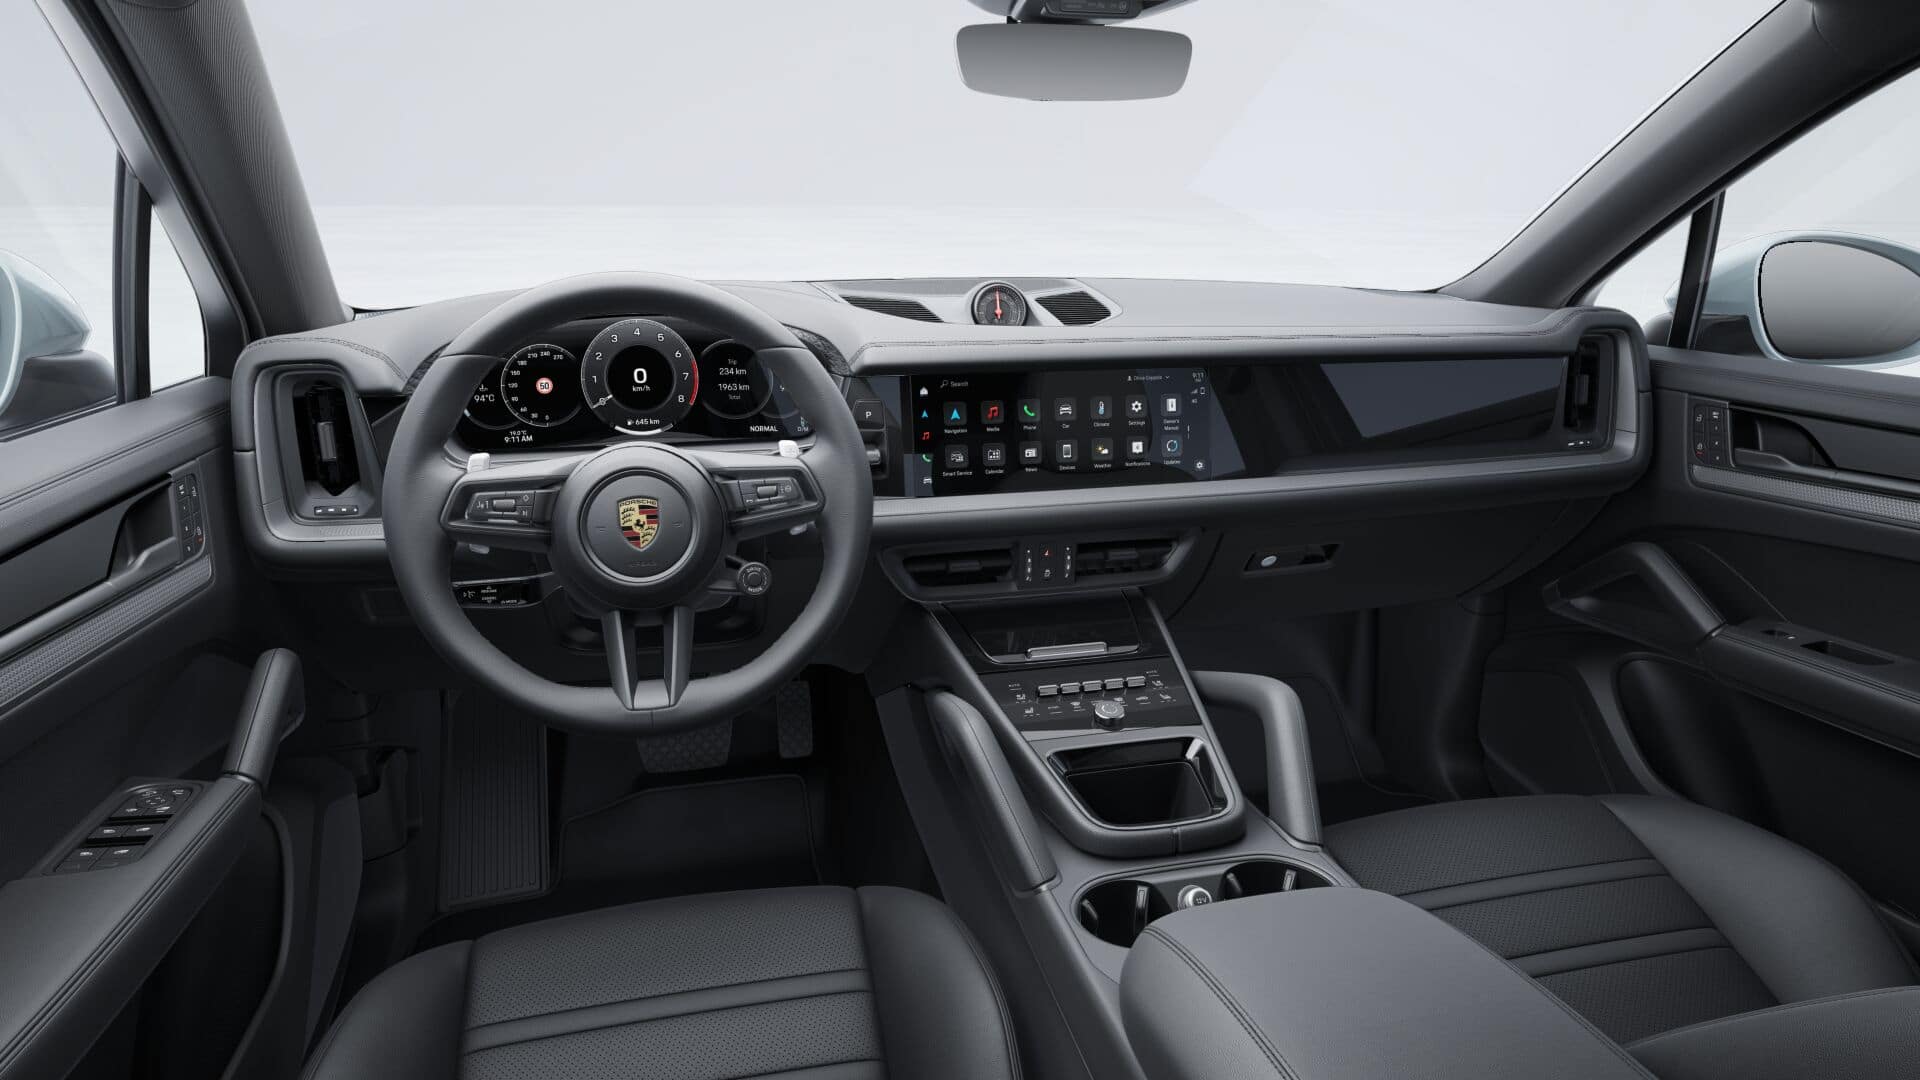 Introducing The New Porsche Cayenne Gold Coast